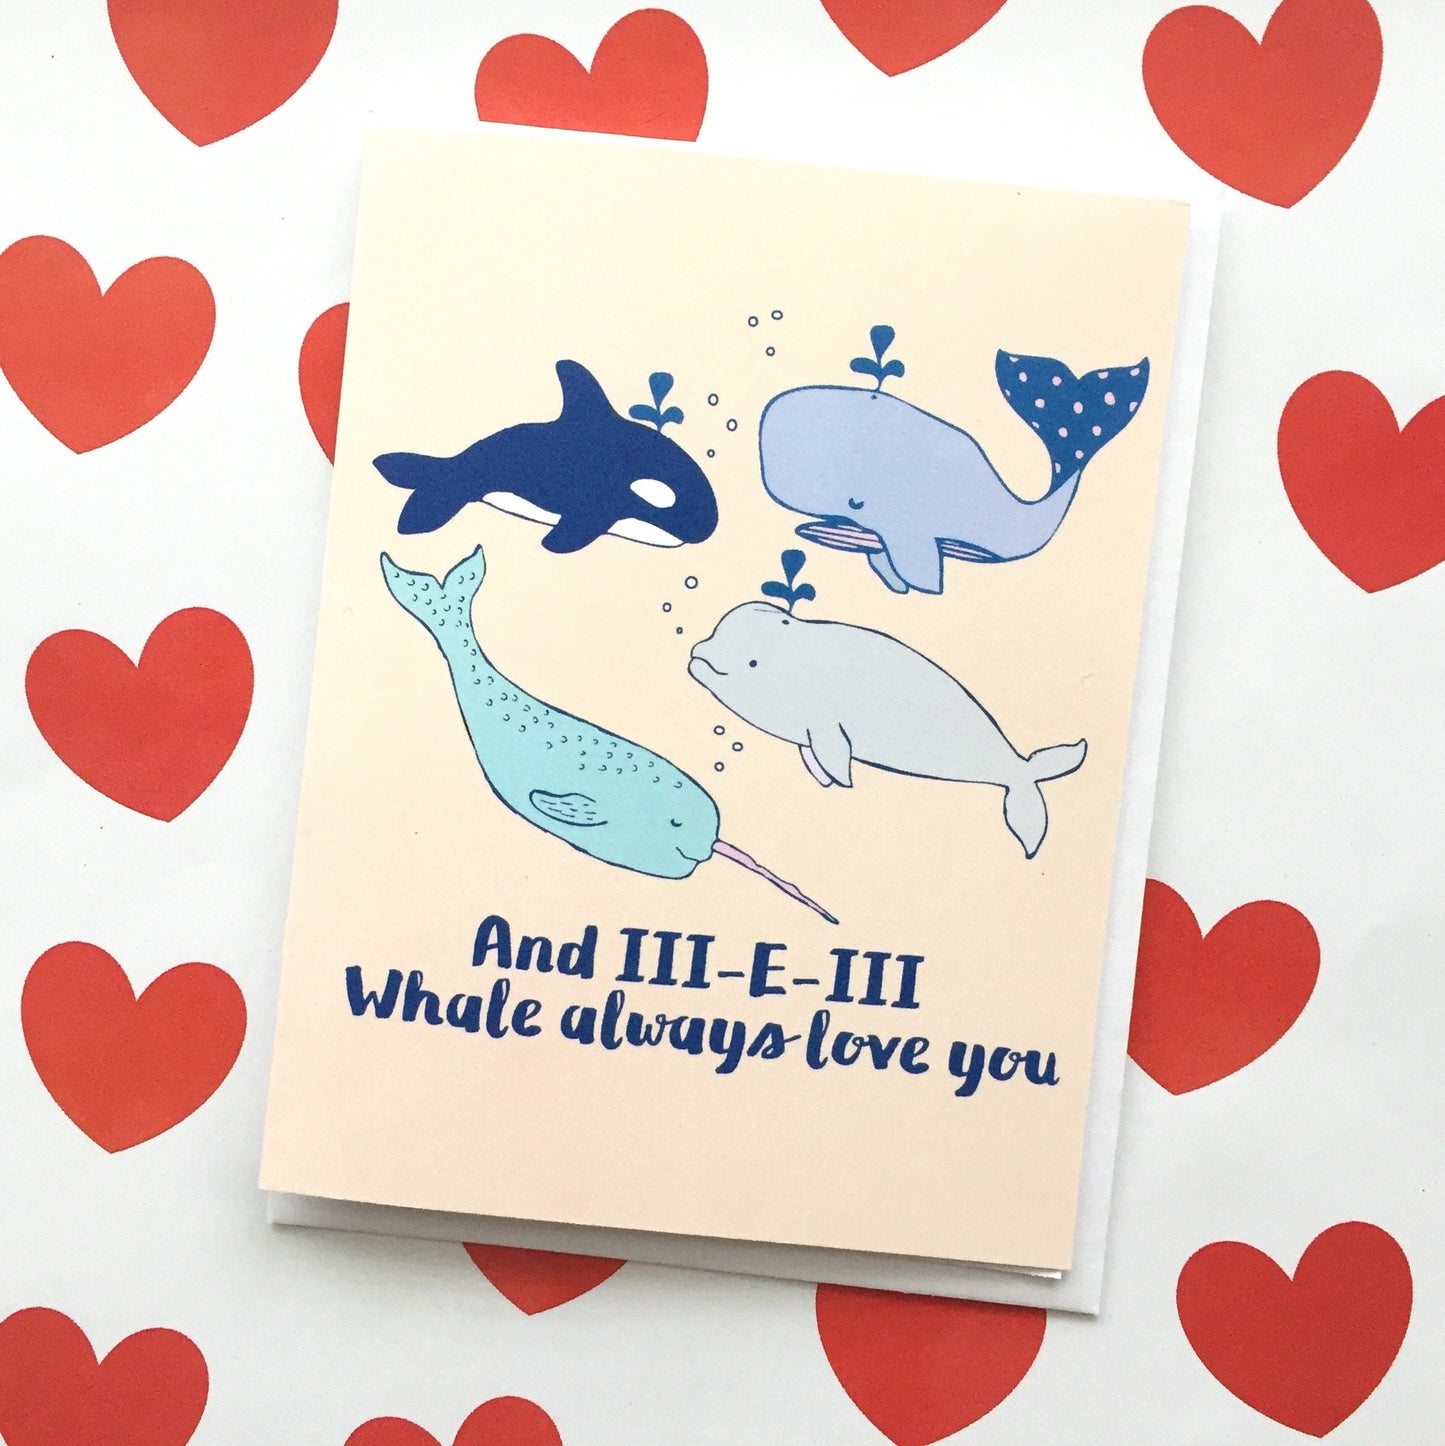 Whale Always Love You Card - Whitney Houston Will Always Love You, R&B card, Punny Card, Whales Print, Whale Art